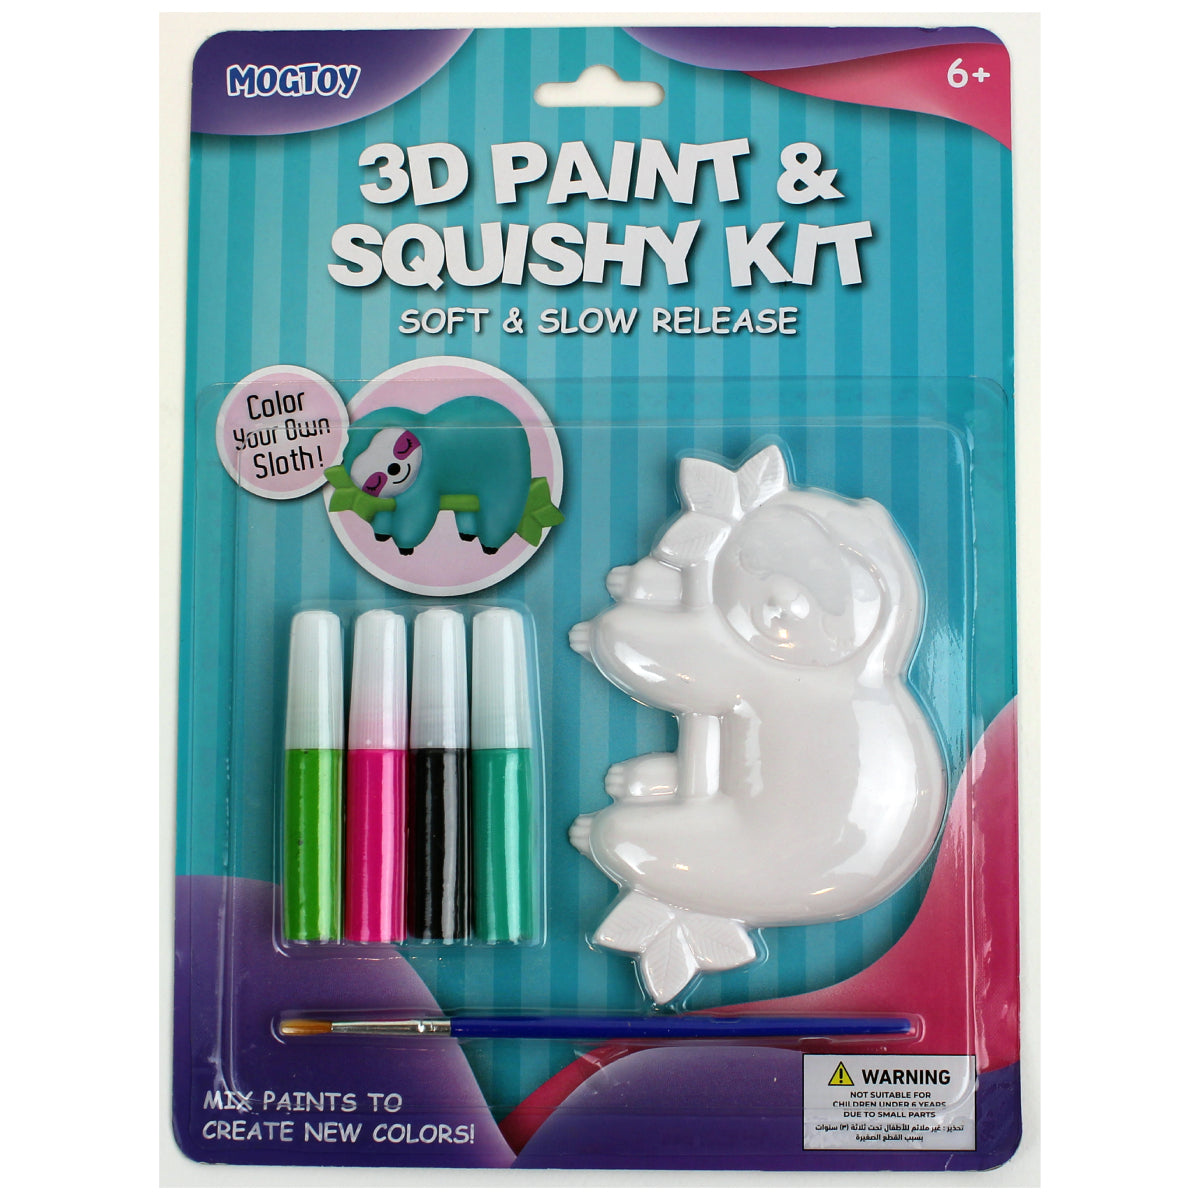 3D paint your own squishy kit